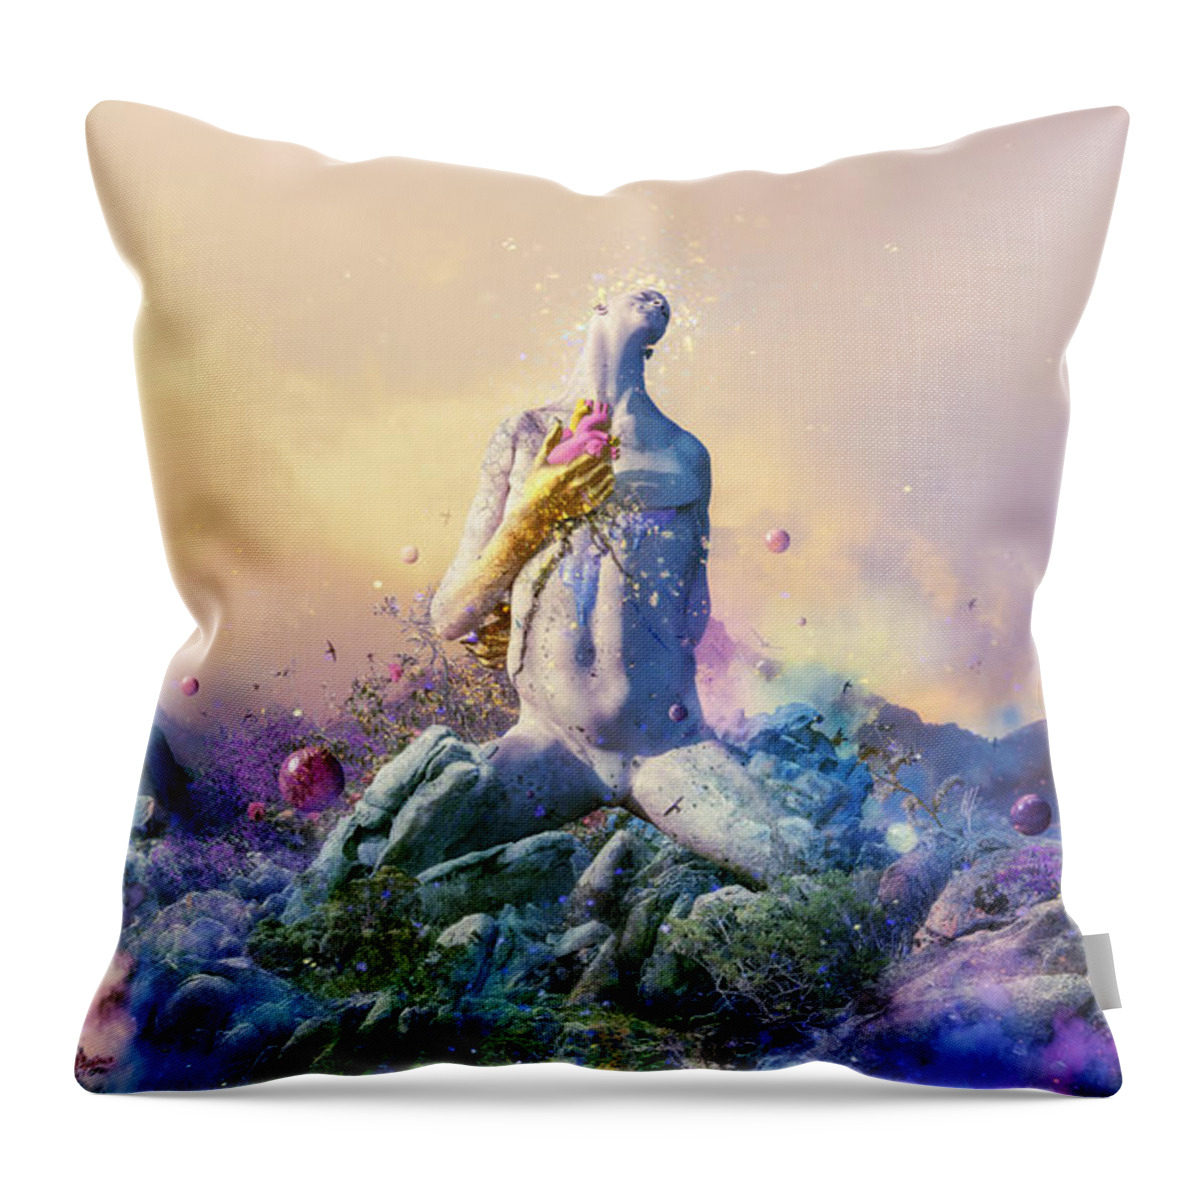 Surreal Throw Pillow featuring the digital art Vulnicura by Mario Sanchez Nevado